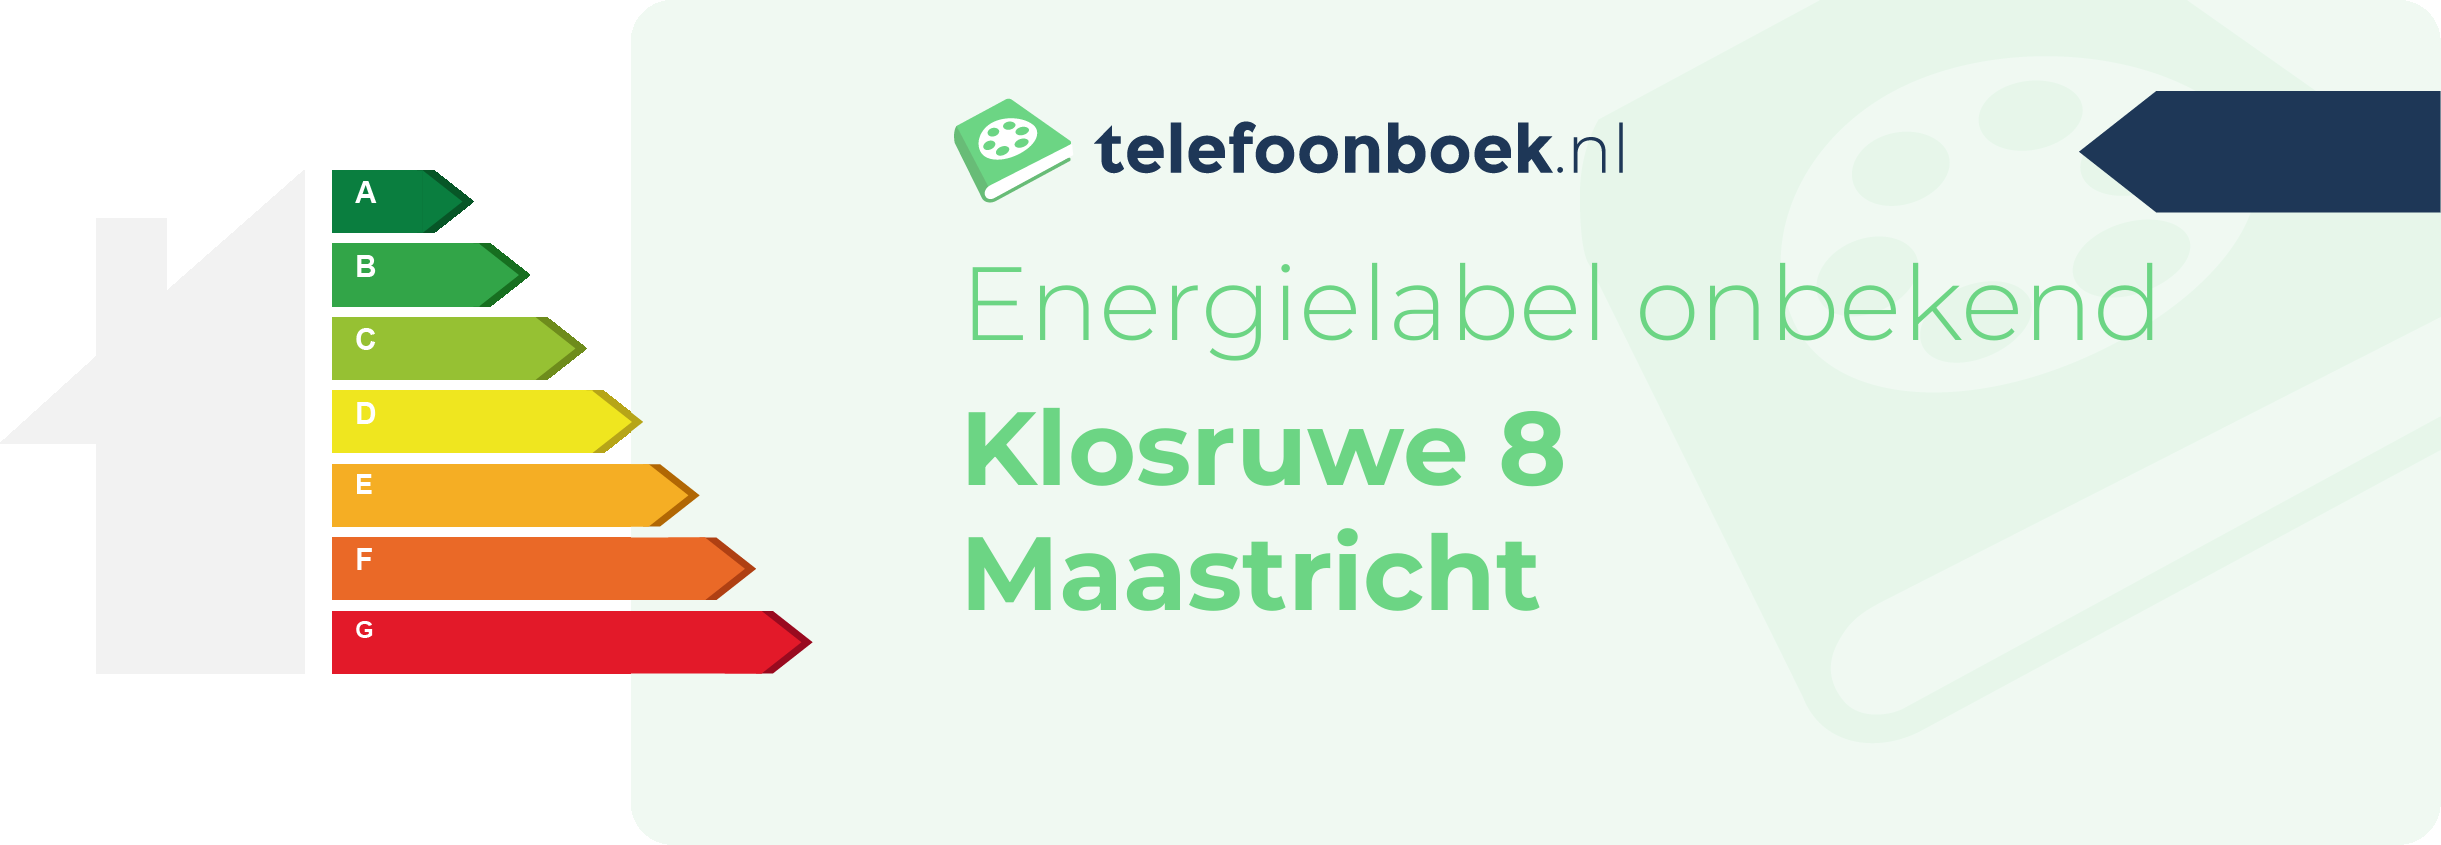 Energielabel Klosruwe 8 Maastricht